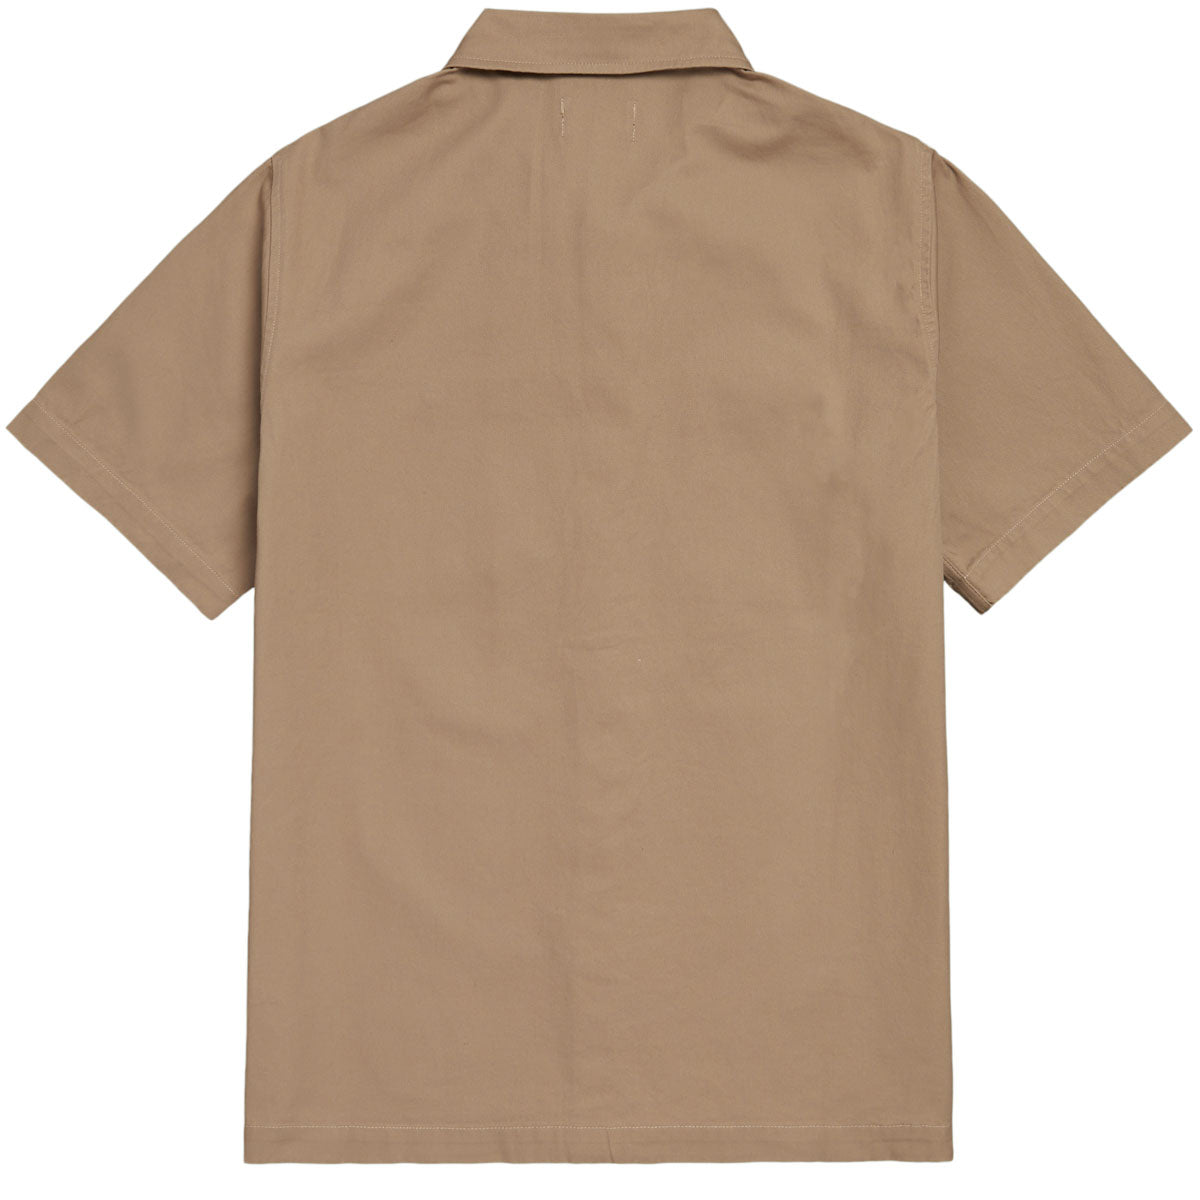 CCS Custom Embroidered Work Shirt - Khaki image 3